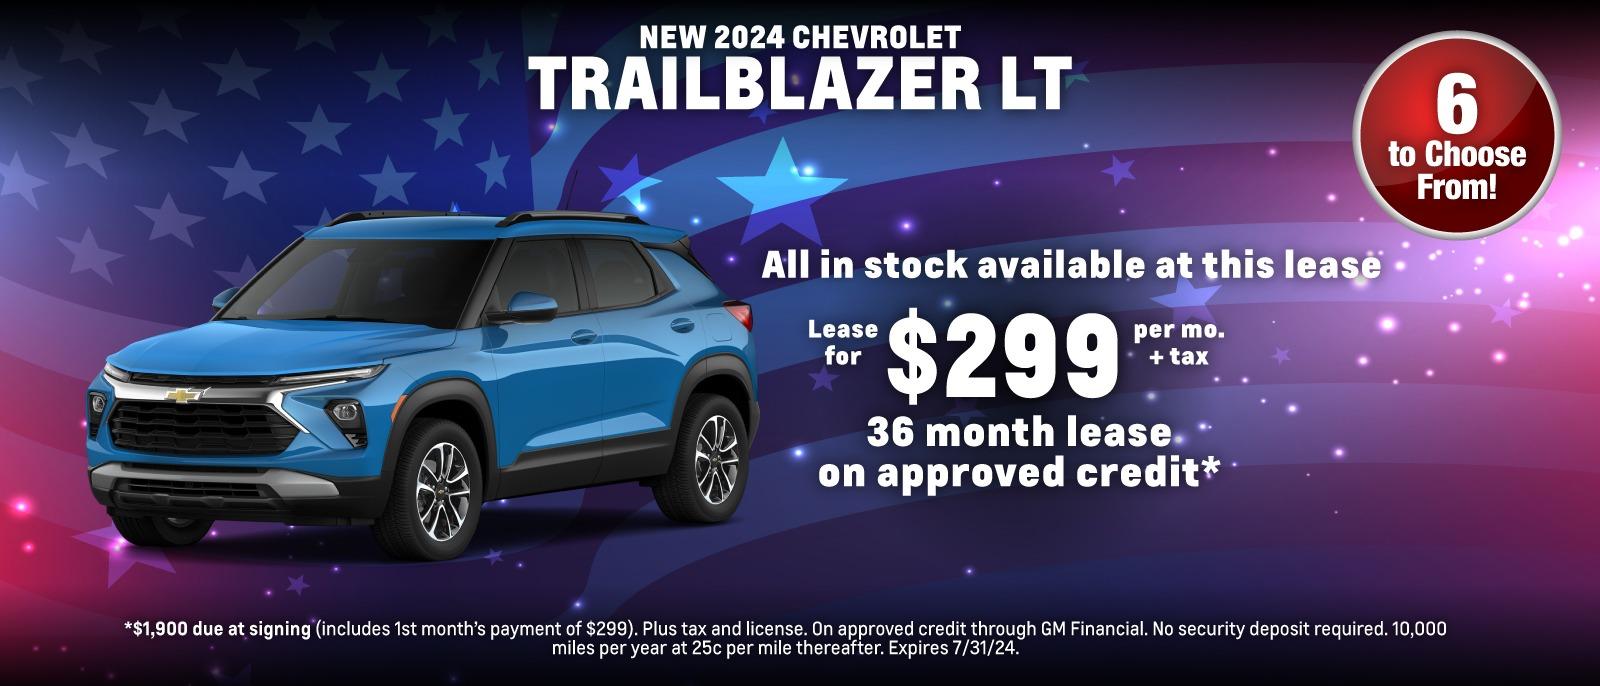 new 2024 Chevy Trailblazer LT  - lease $299/month